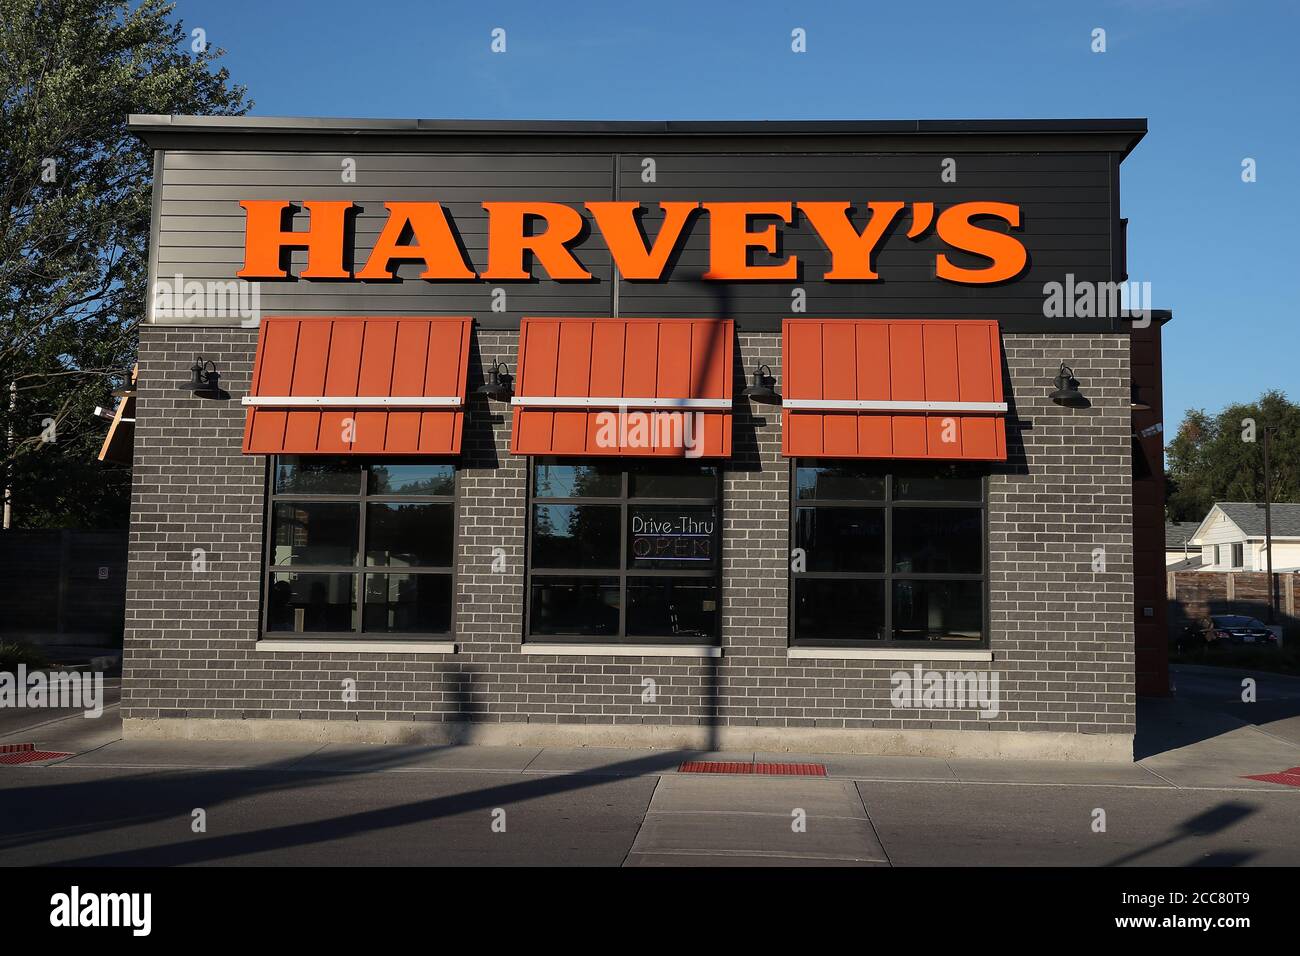 Harveys Zeichen. London Ontario Kanada Luke Durda/Alamy Stockfoto